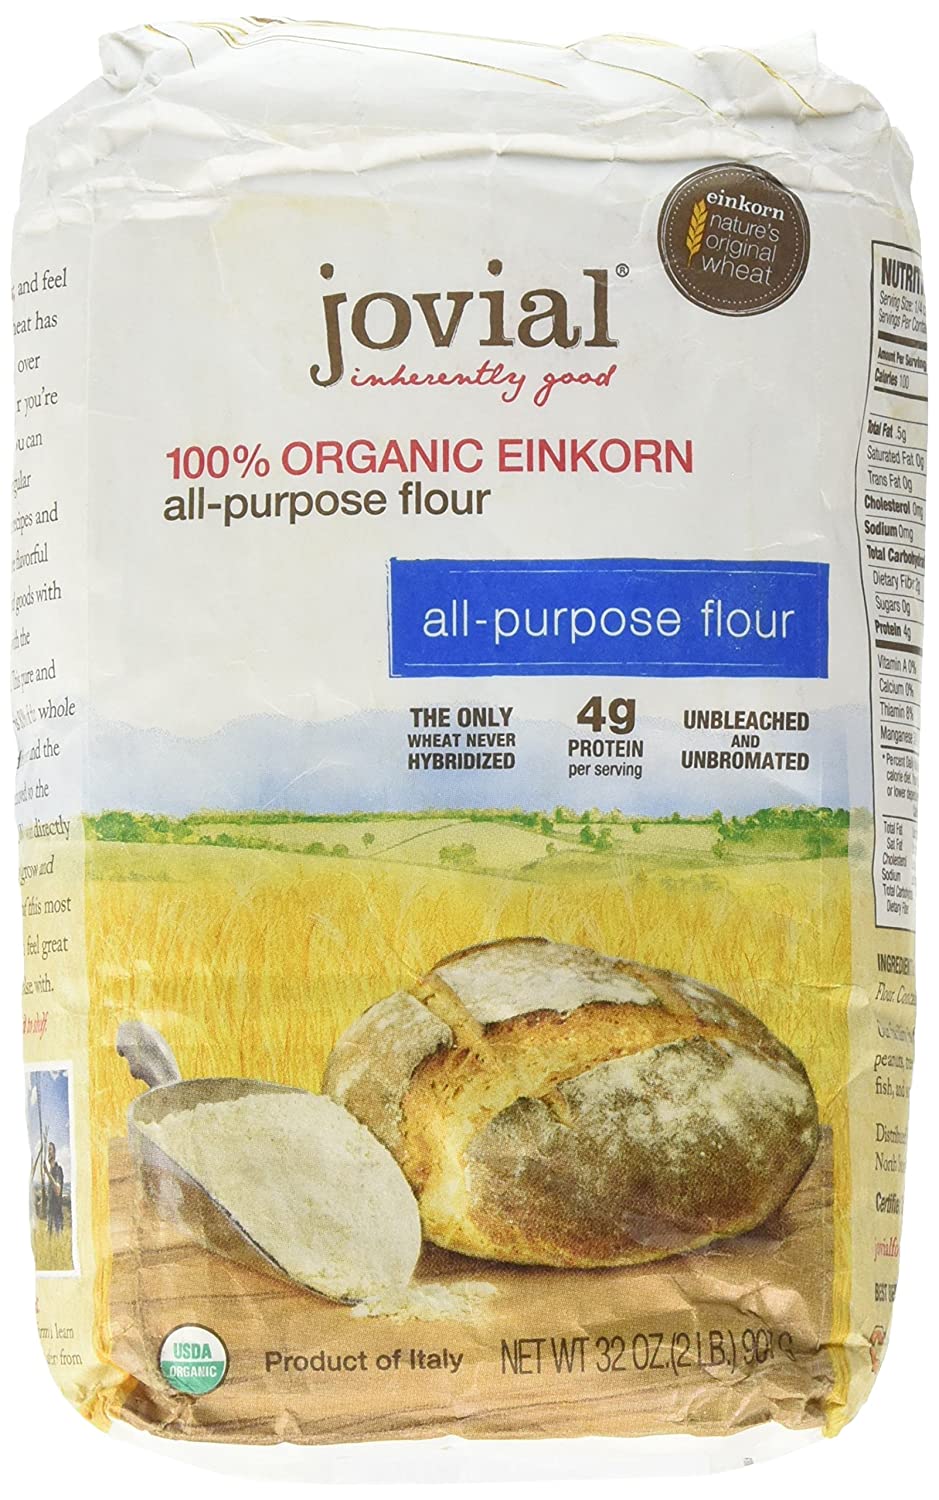 100% einkorn all-purpose flour as a substitute for wheat all-purpose flour